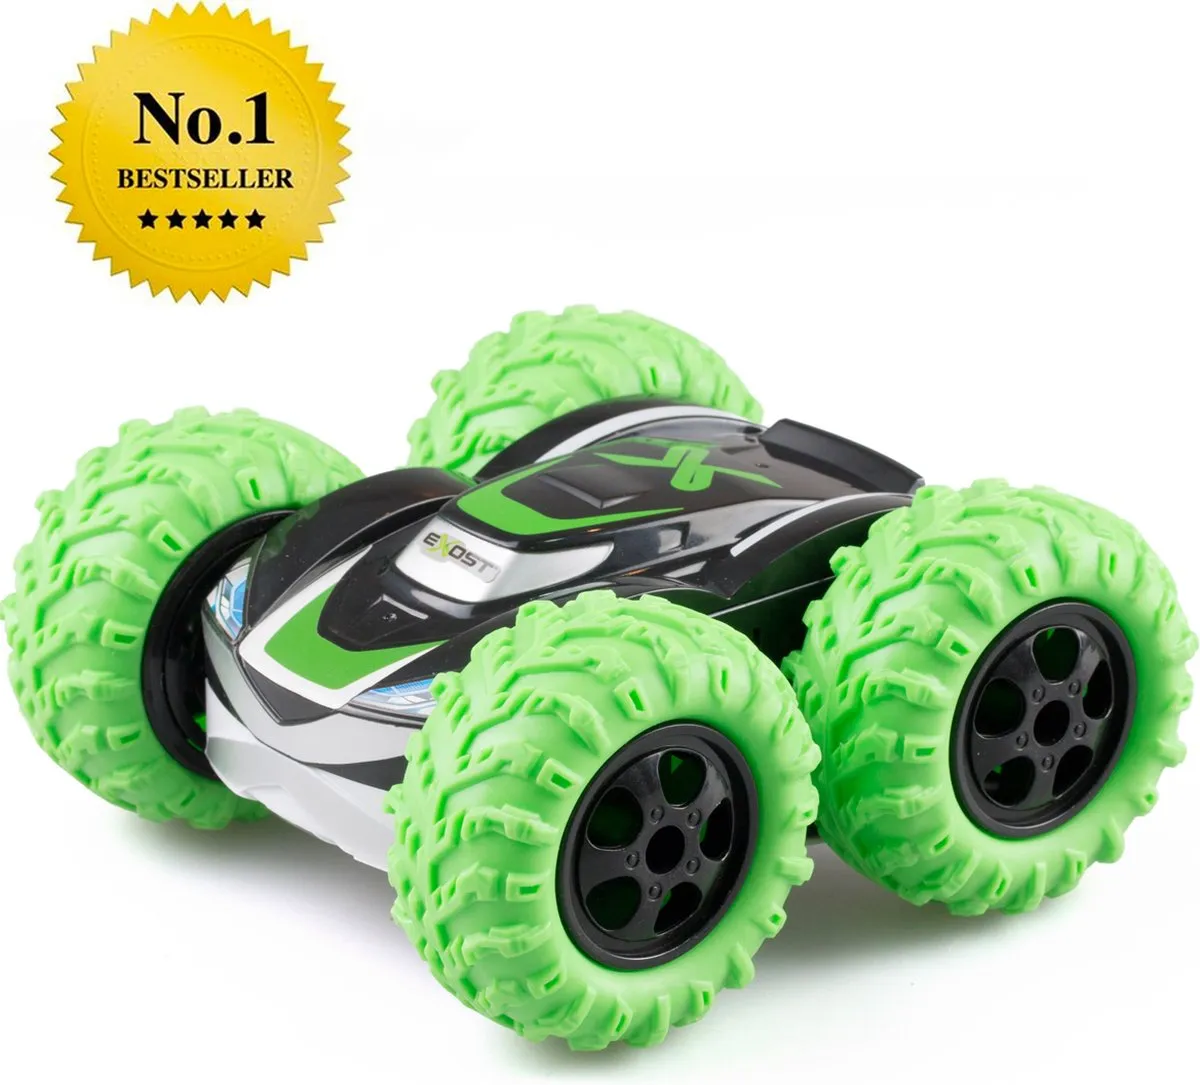 Exost RC 360 Cross II Stuntauto groen 1:18 - RC Auto - Bestuurbare Auto speelgoed